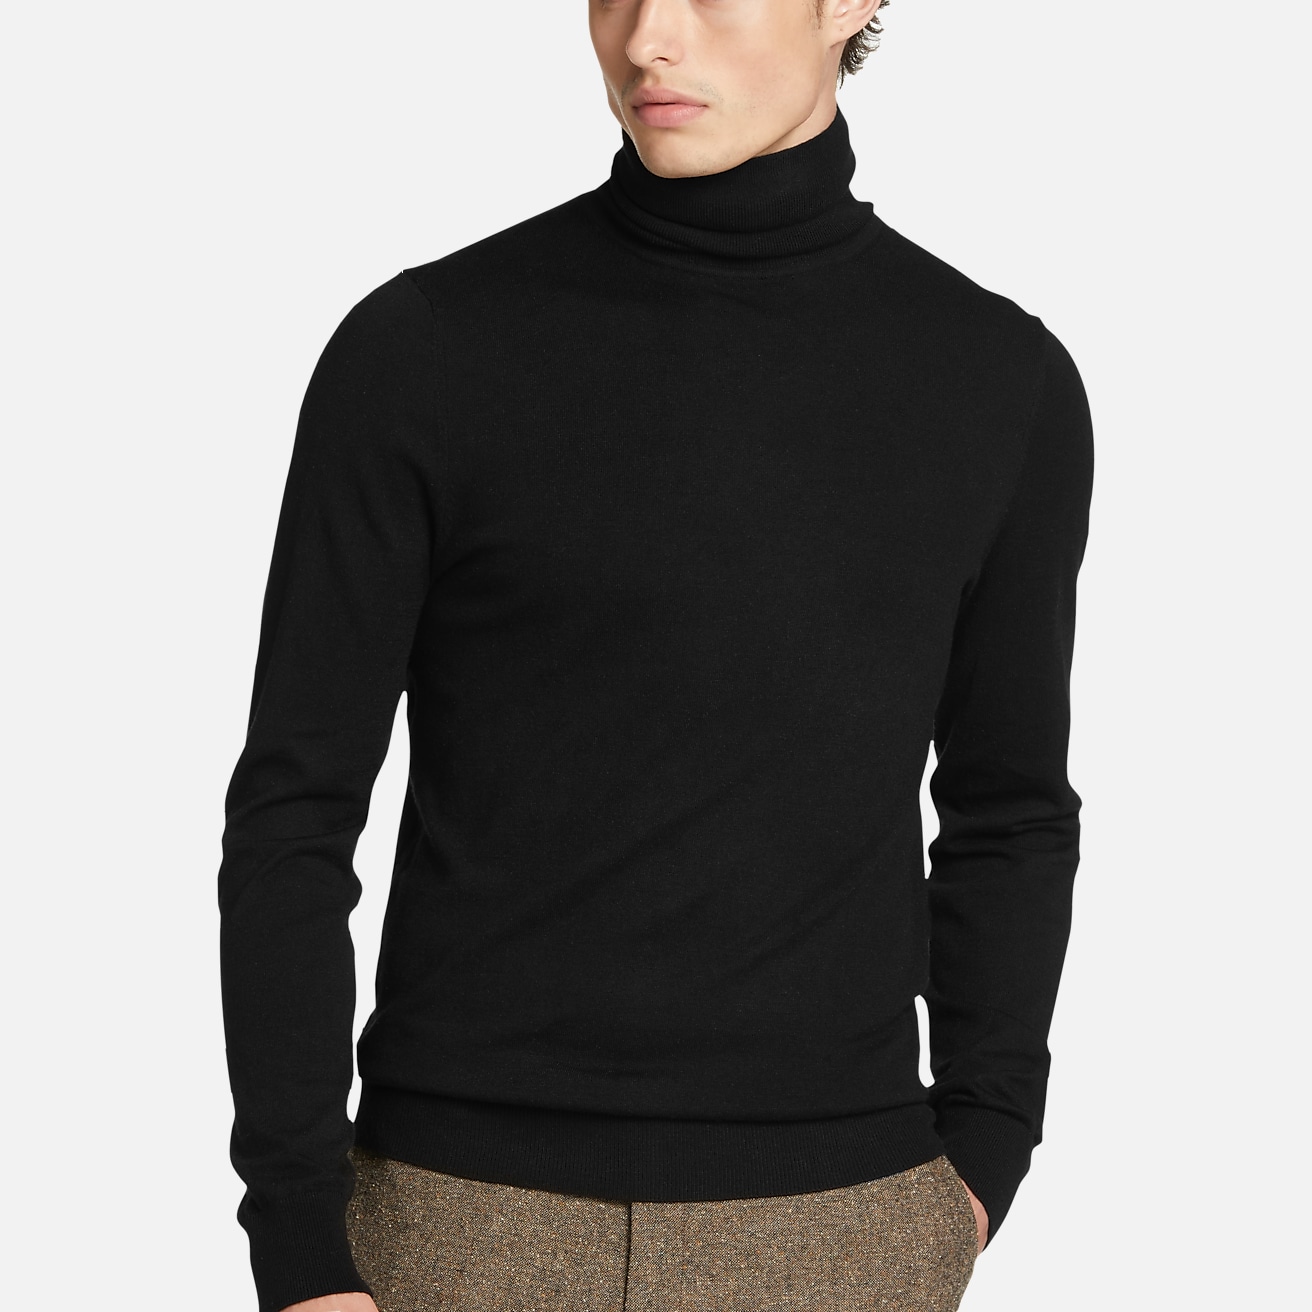 Grey Layered Turtleneck Sweater Top - FINAL SALE